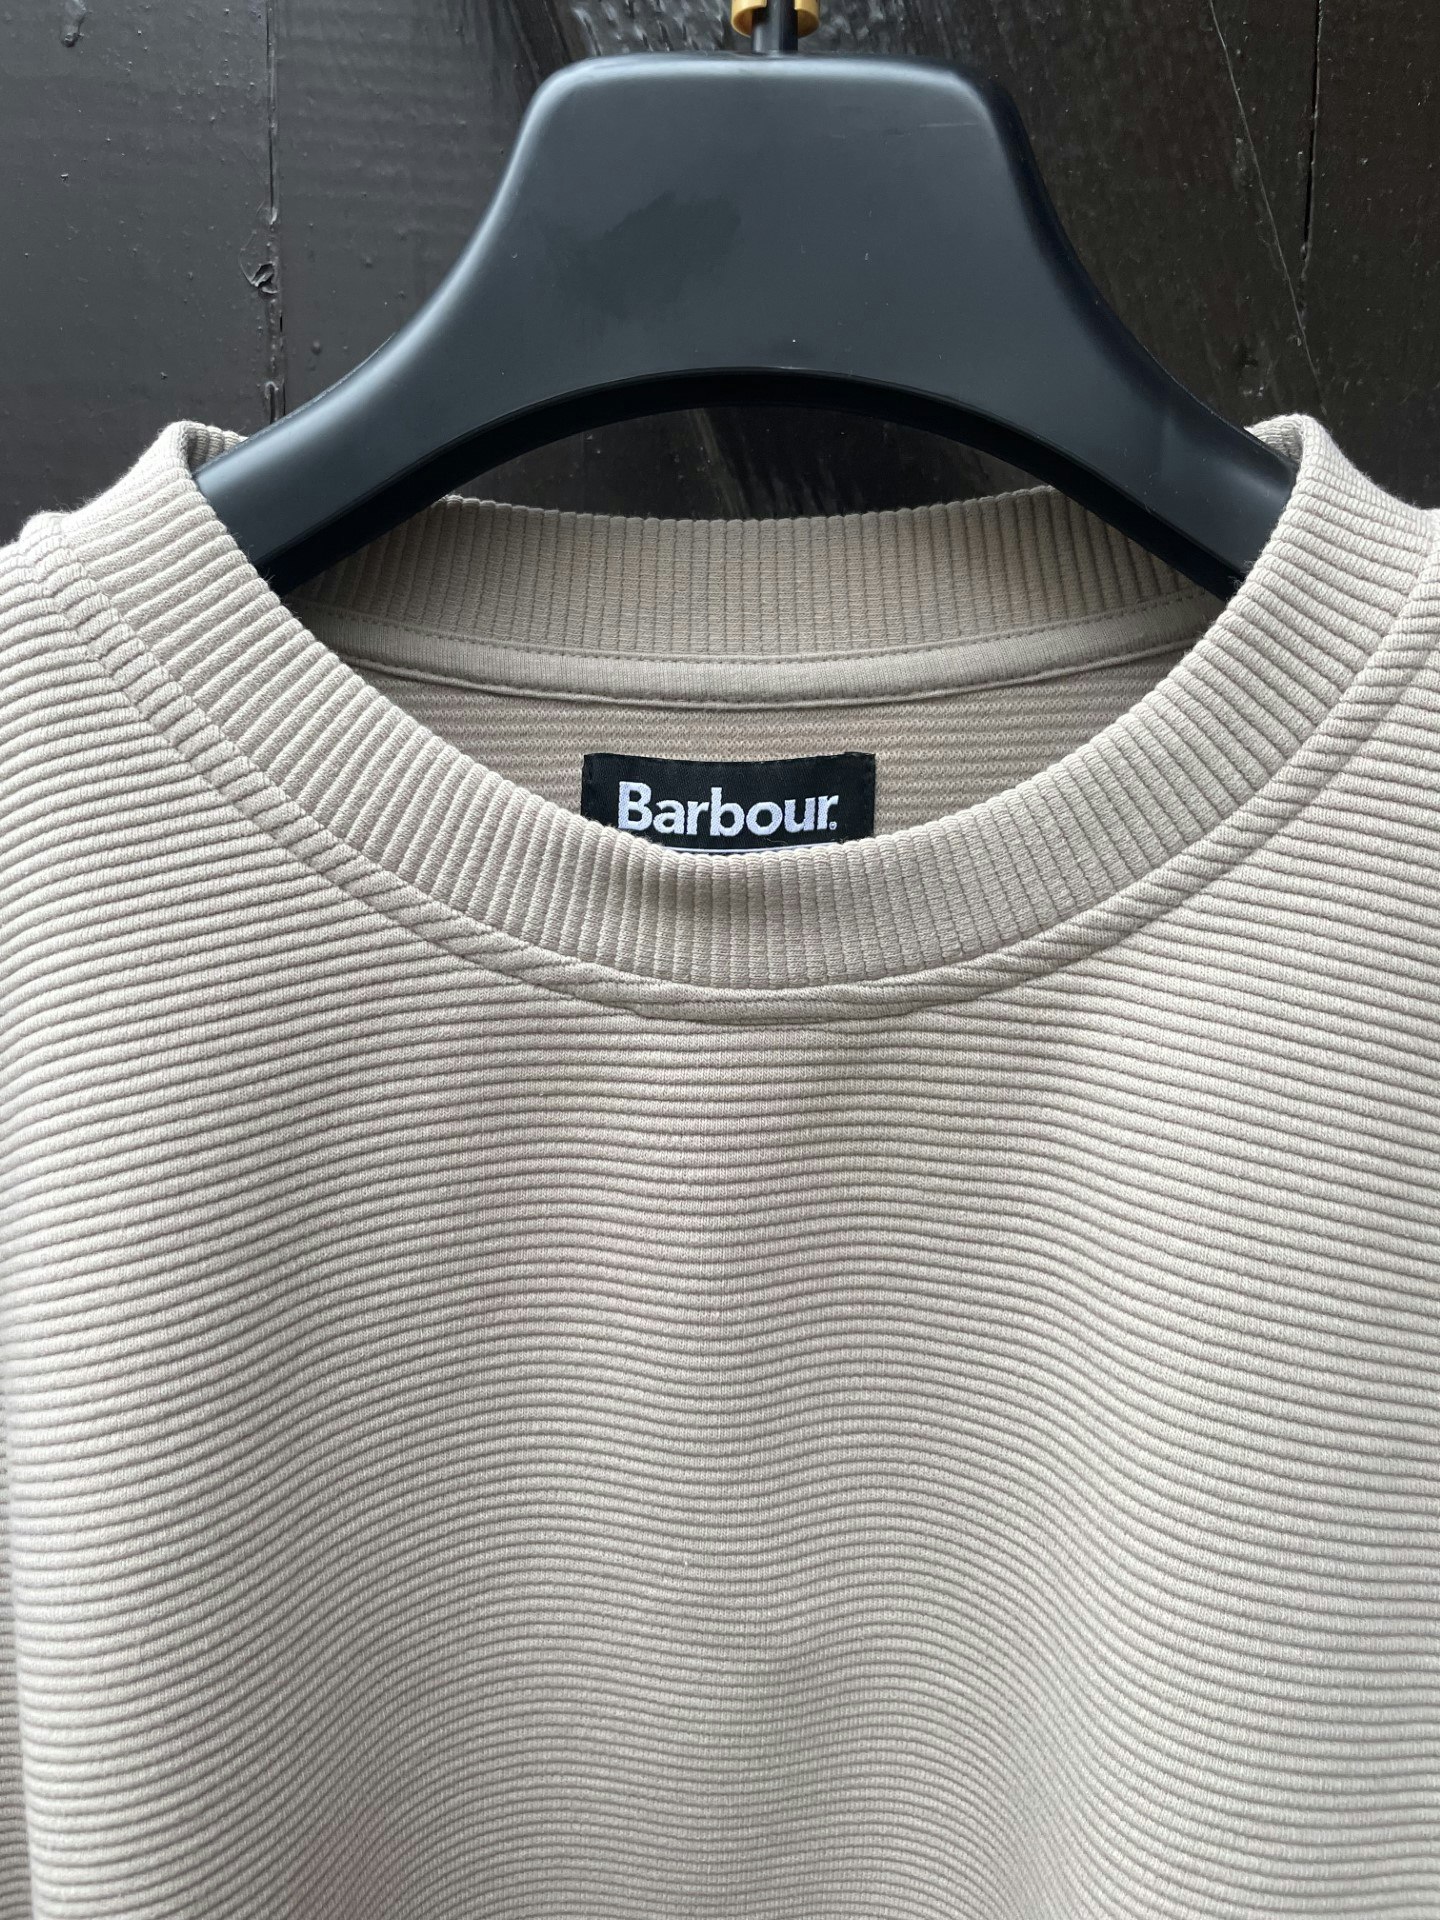 Barbour "Kinghorn Sweatshirt " , oat